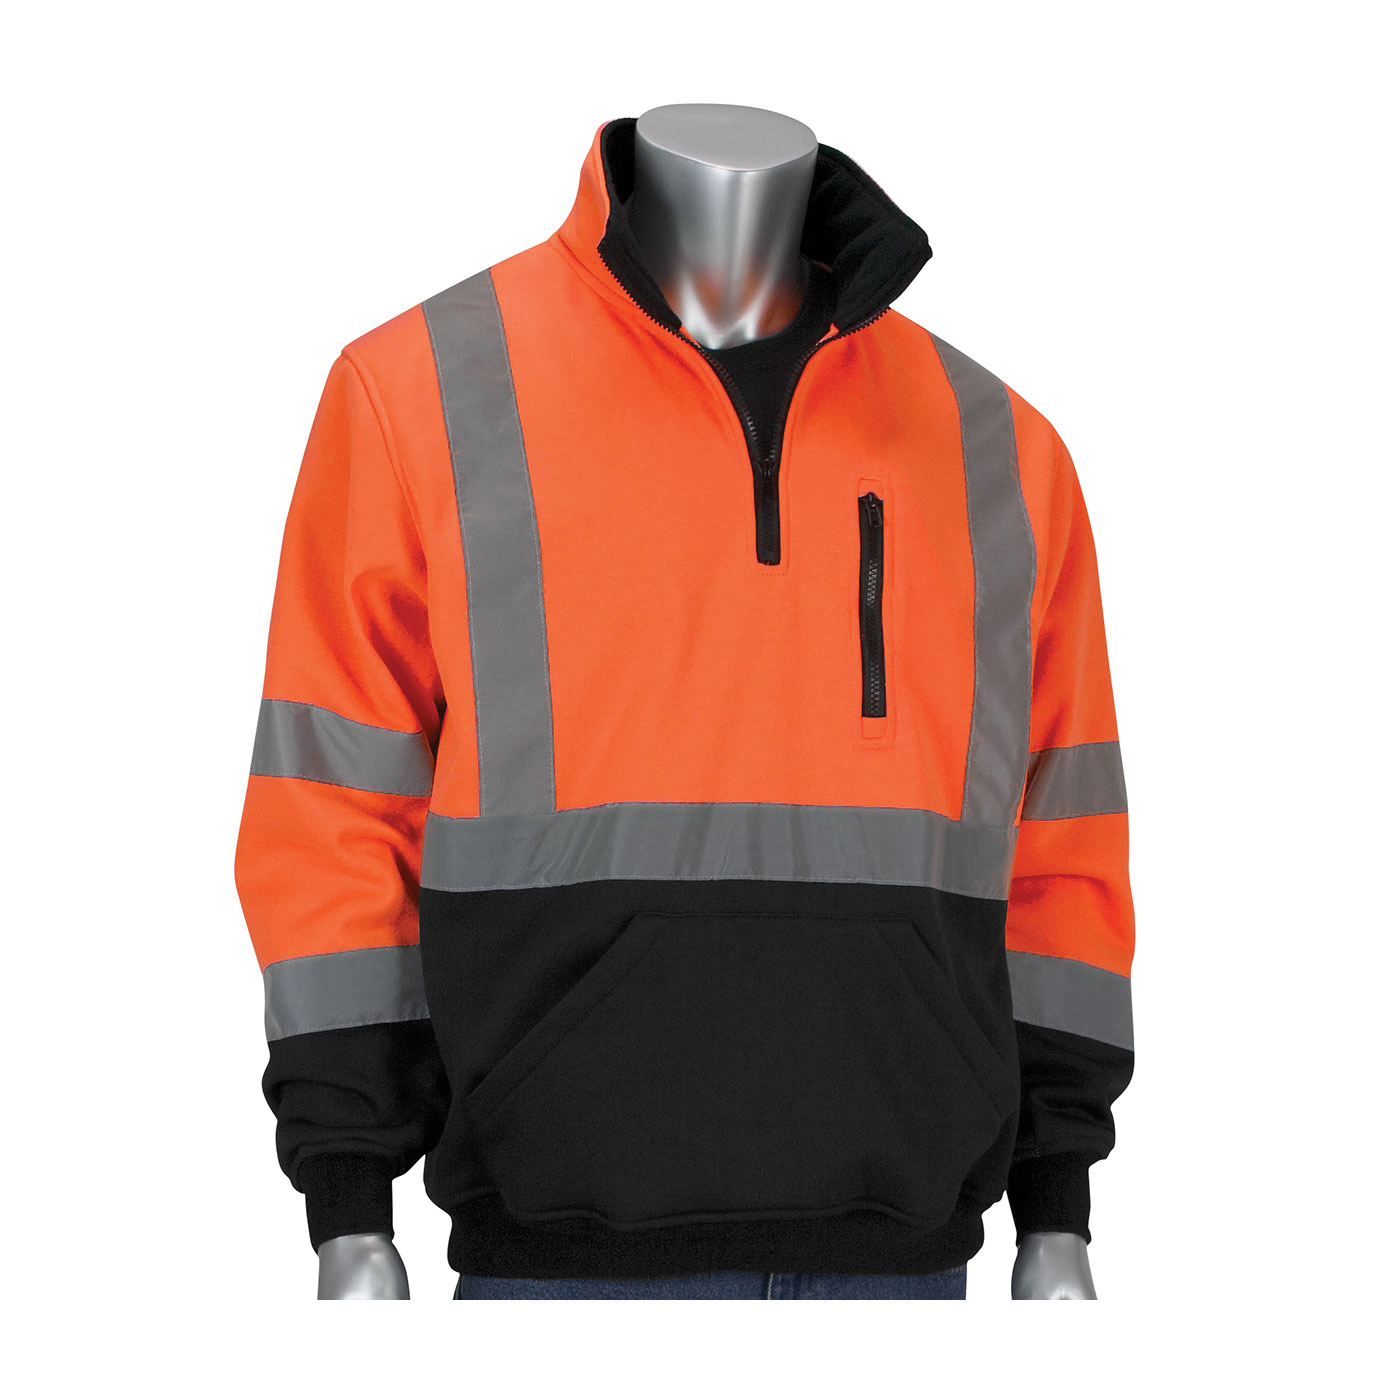 PIP® 323-1330B-OR/XL Sweatshirt With Black Bottom, Unisex, XL, Orange, 30.7 in L, Polyester Fleece